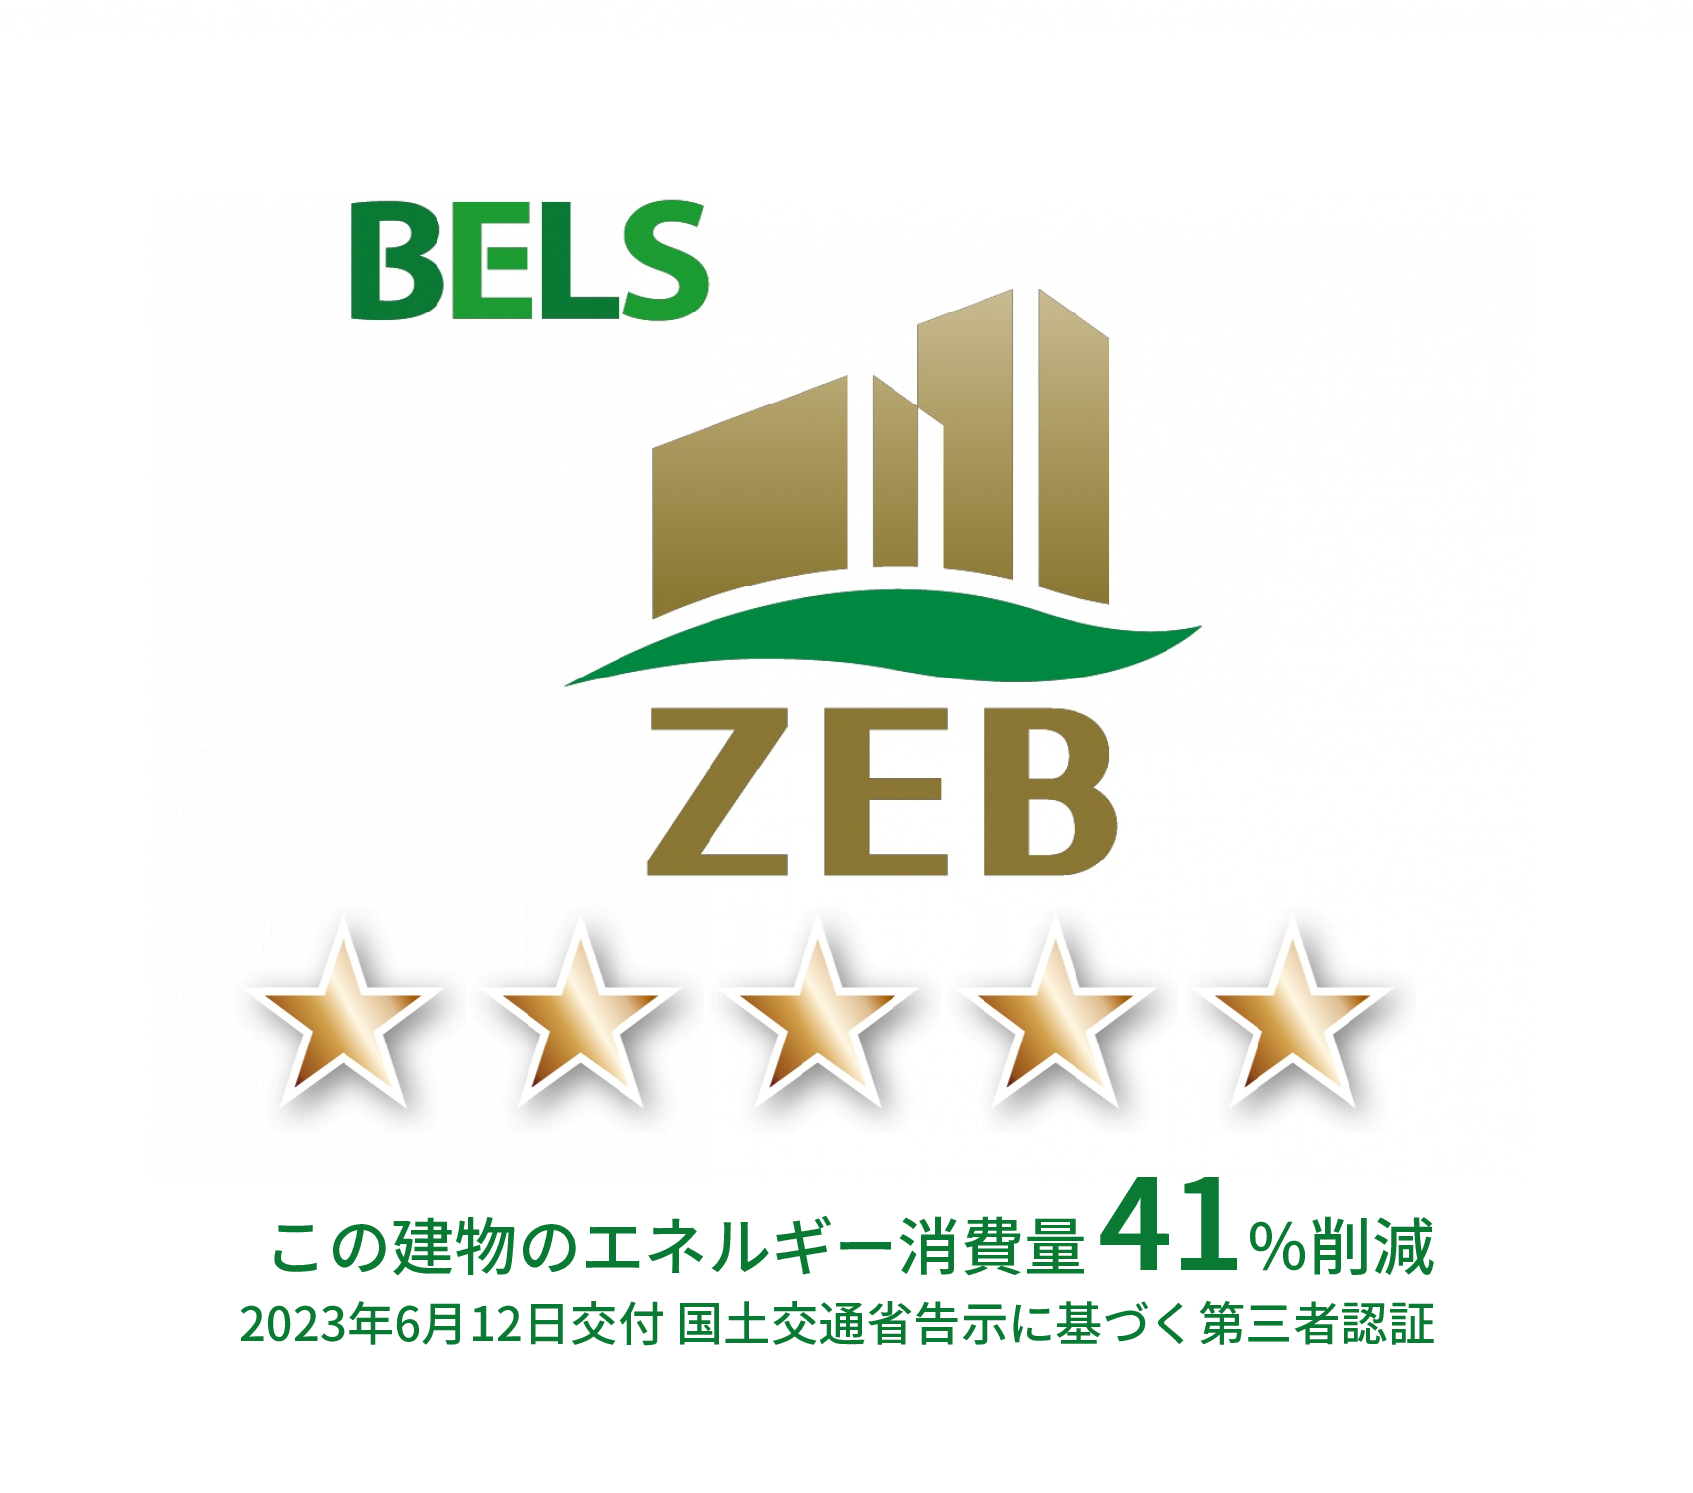 BELS Certification